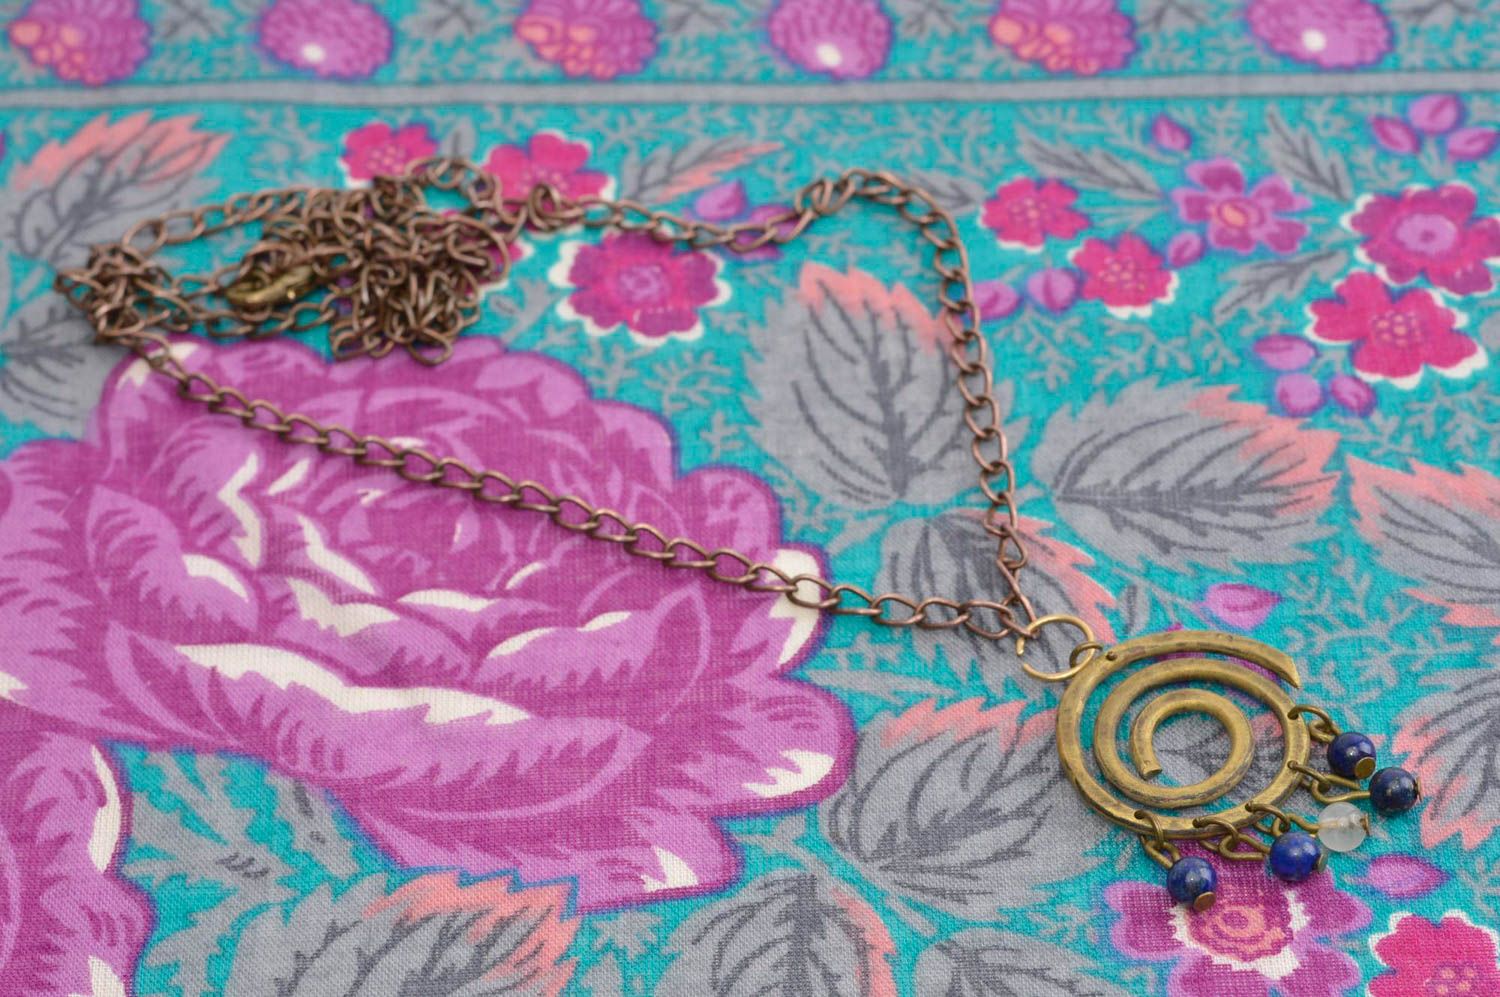 Handmade jewelry copper jewelry female pendant neck accessory gift ideas photo 2